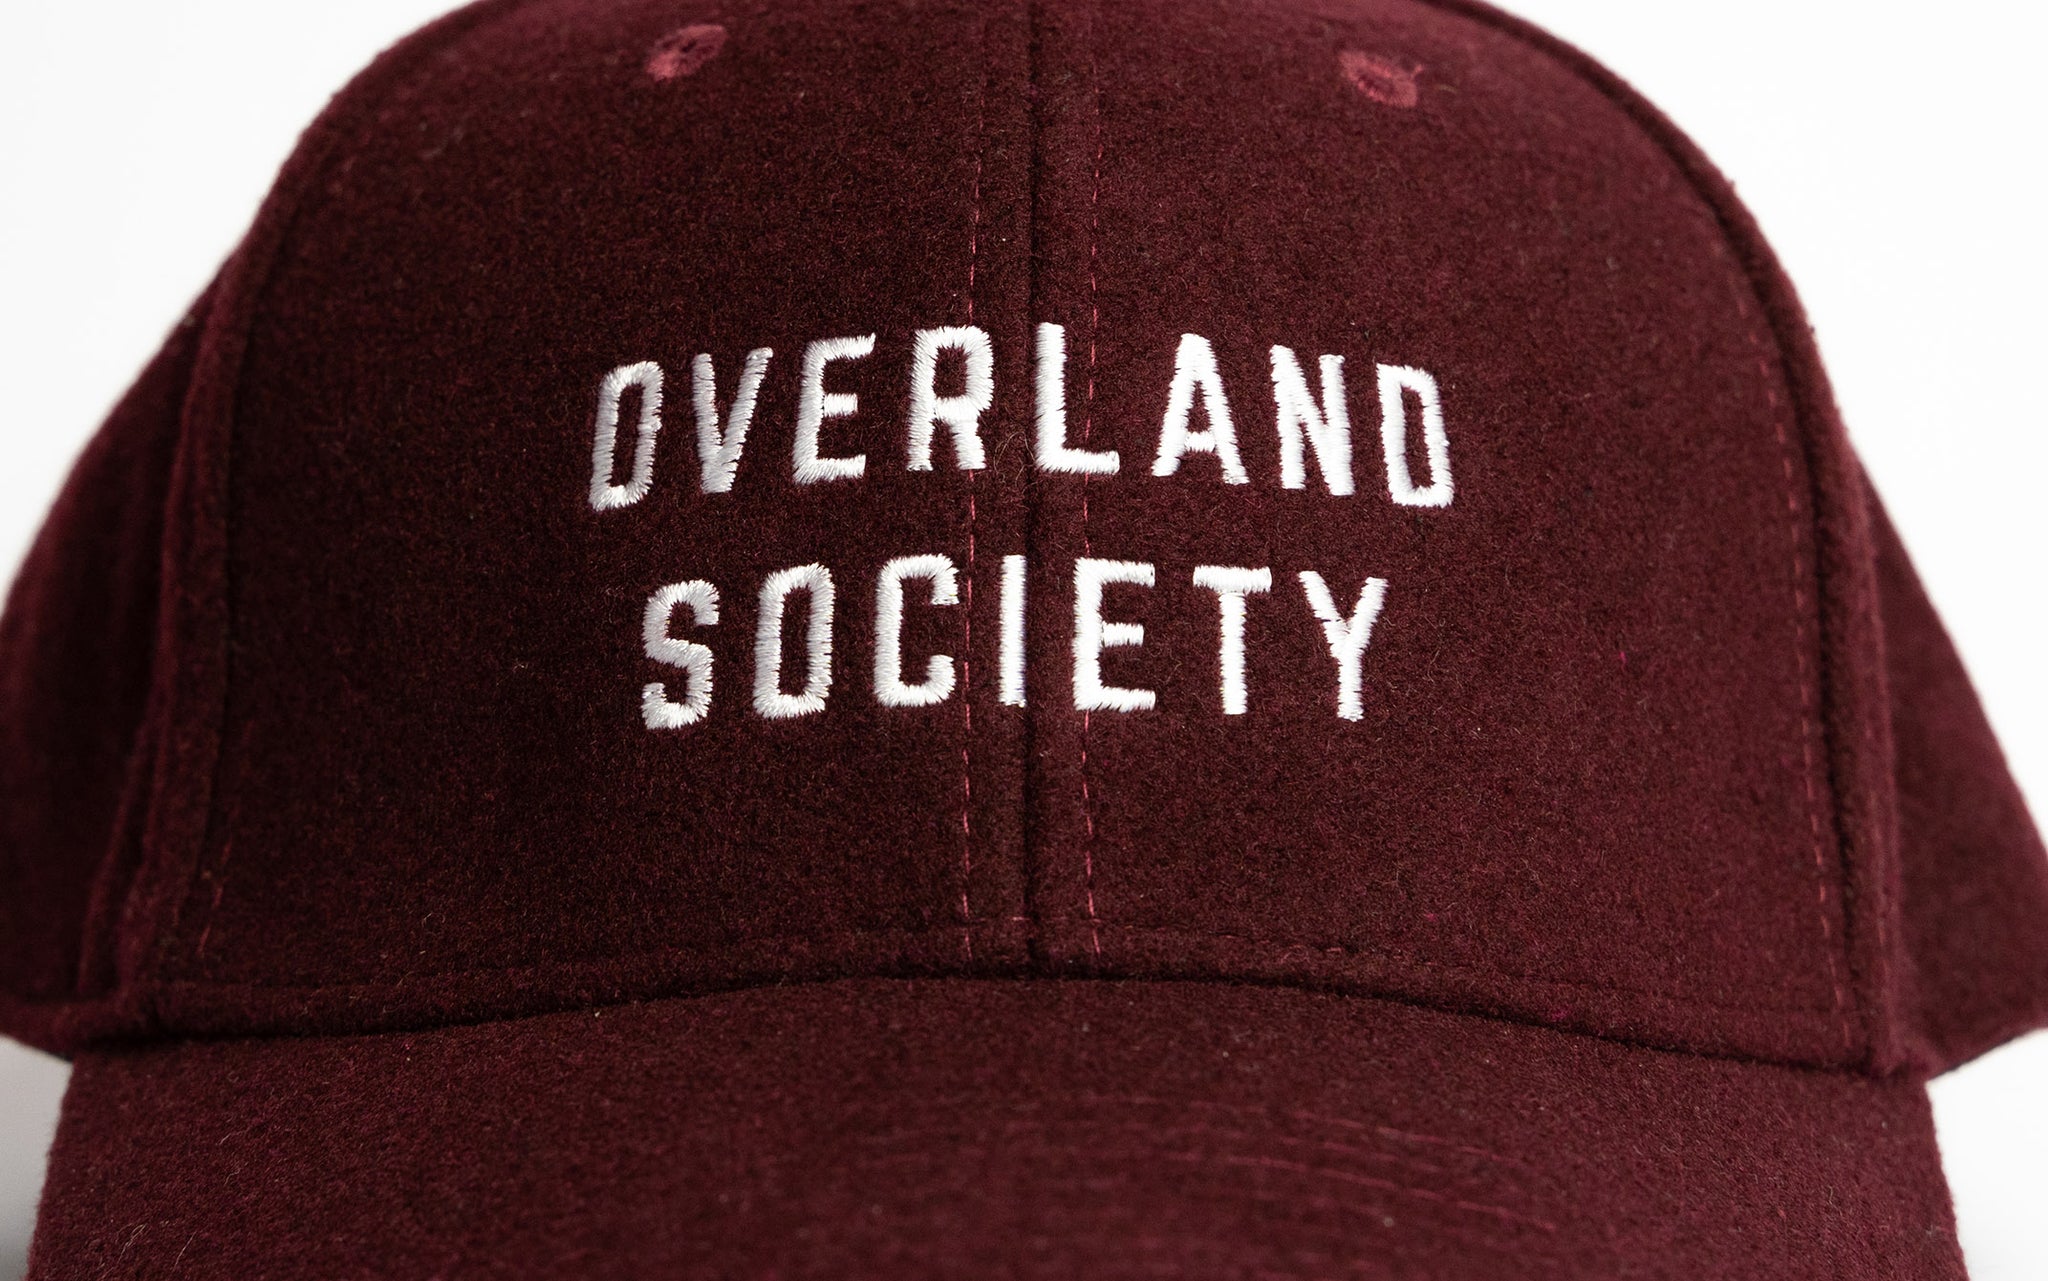 Burgundy Overland Society Winter Baseball Cap